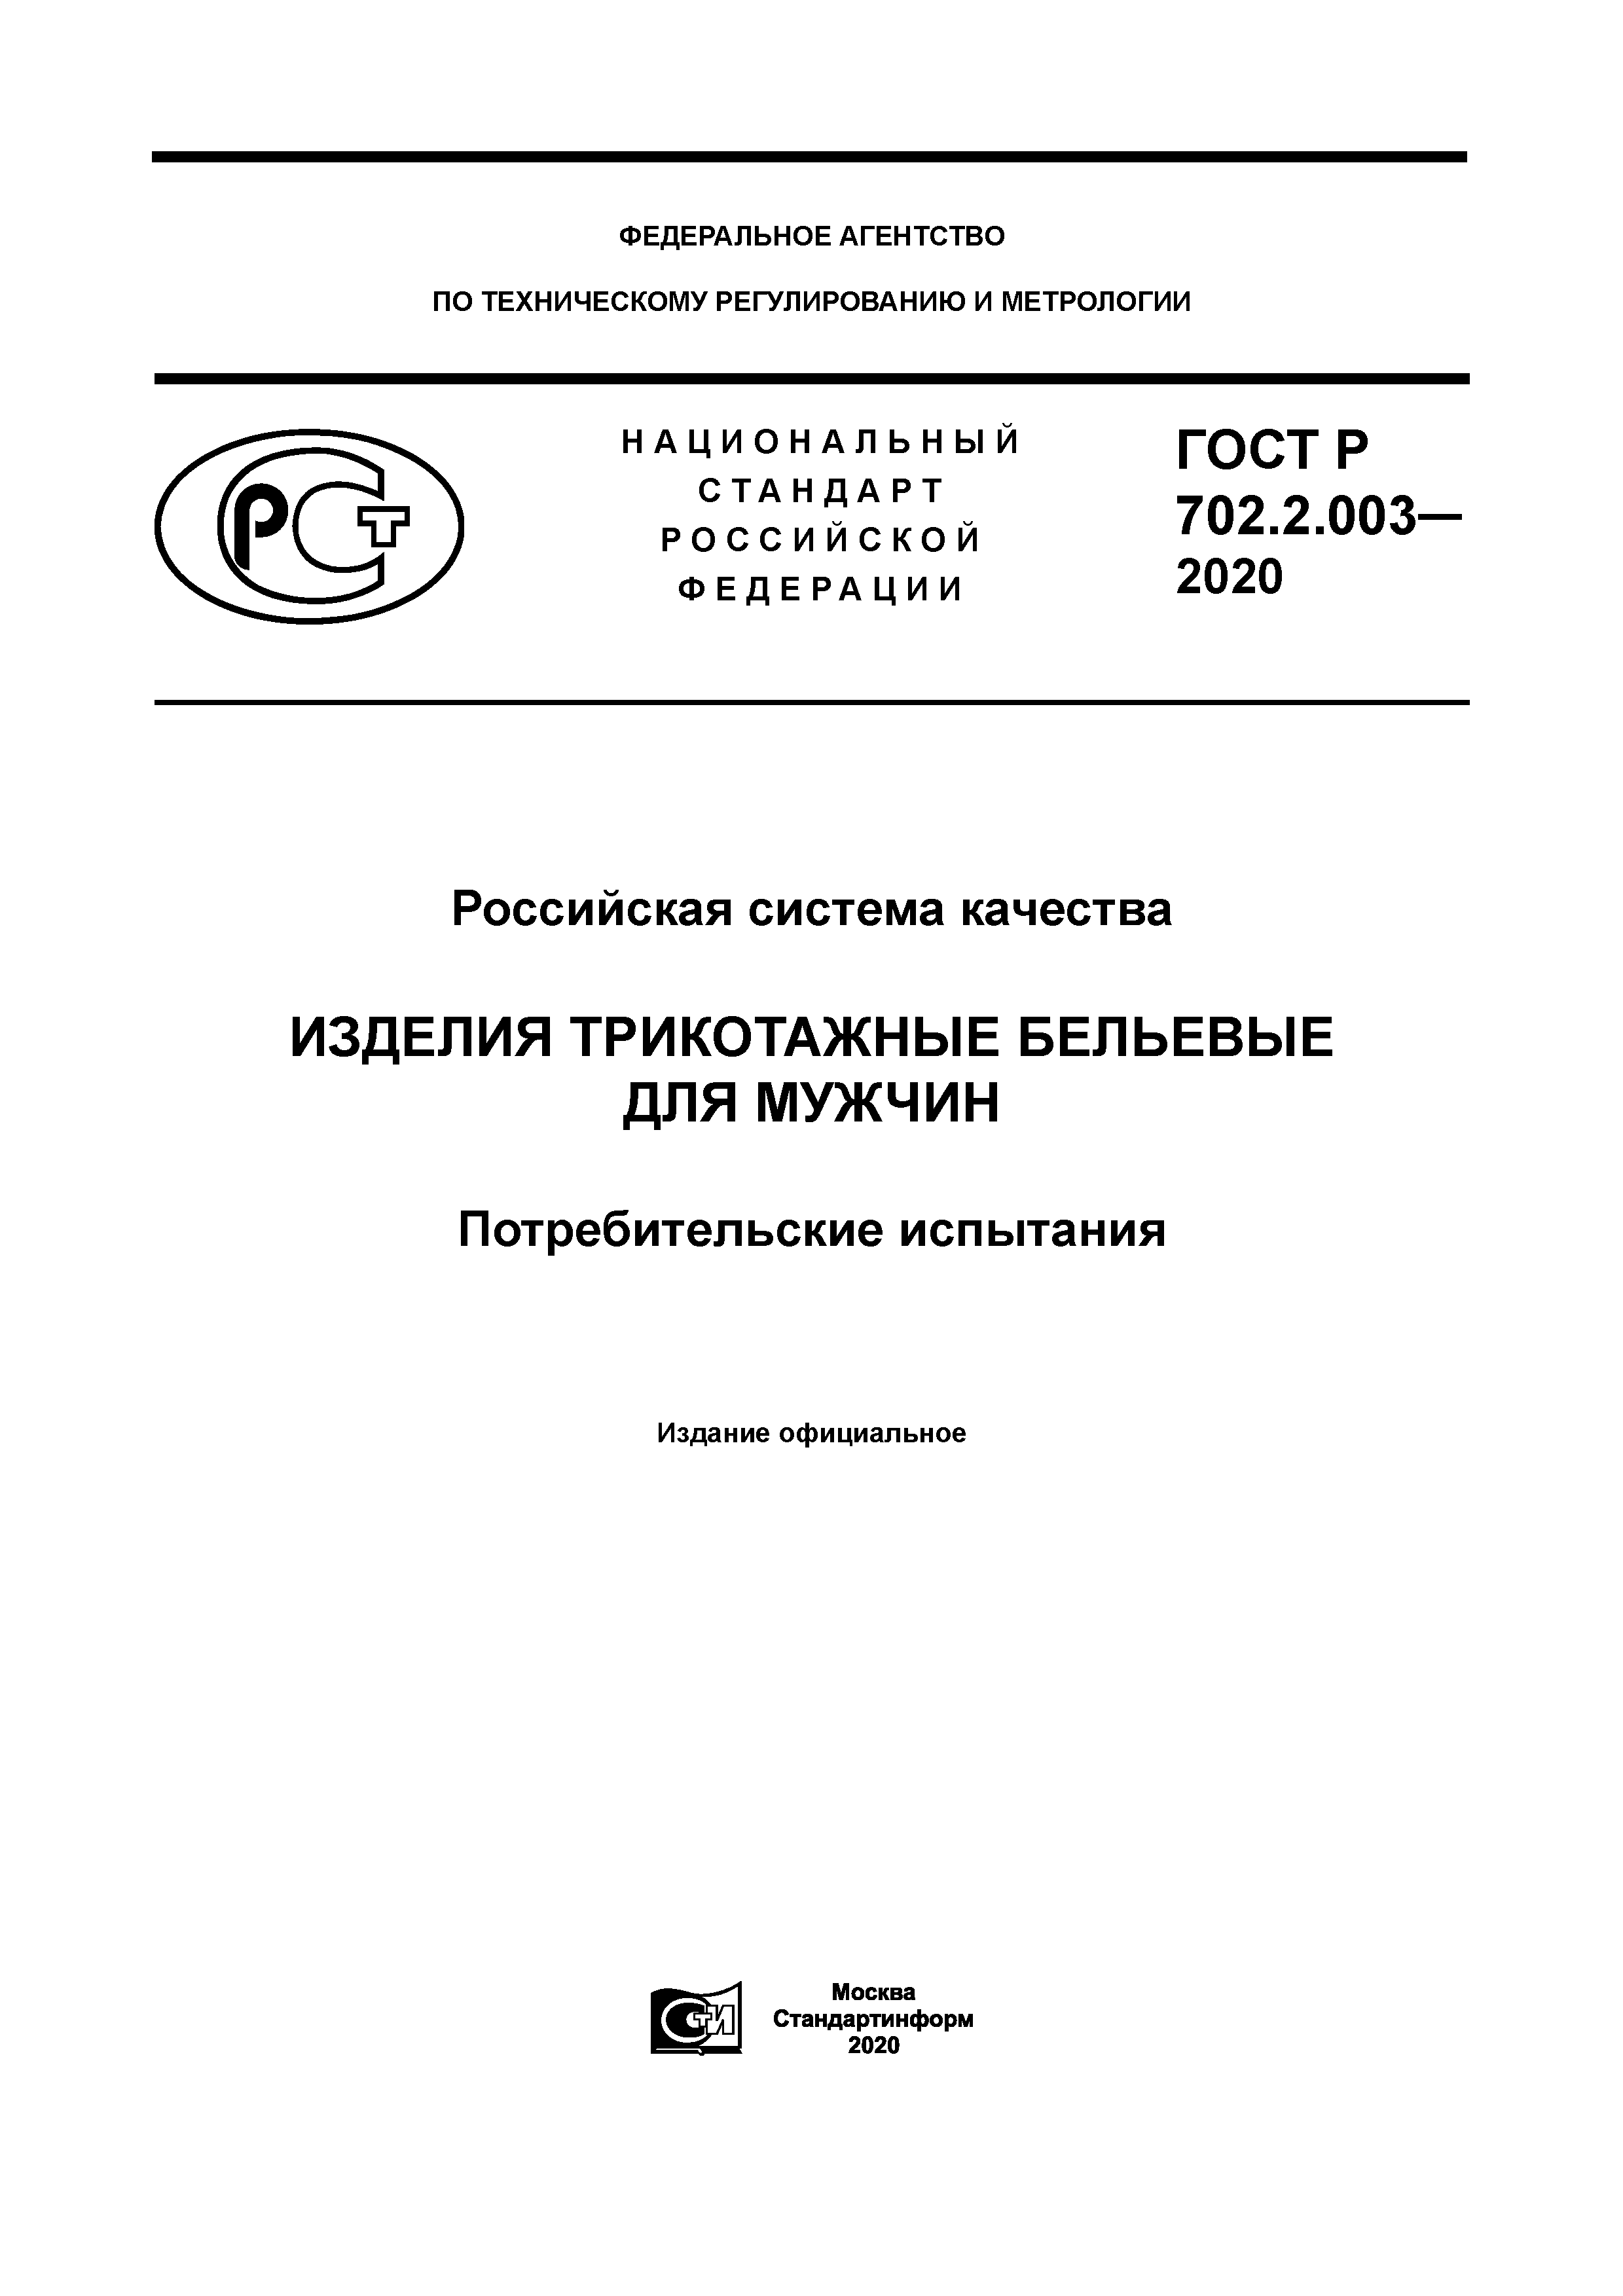 ГОСТ Р 702.2.003-2020